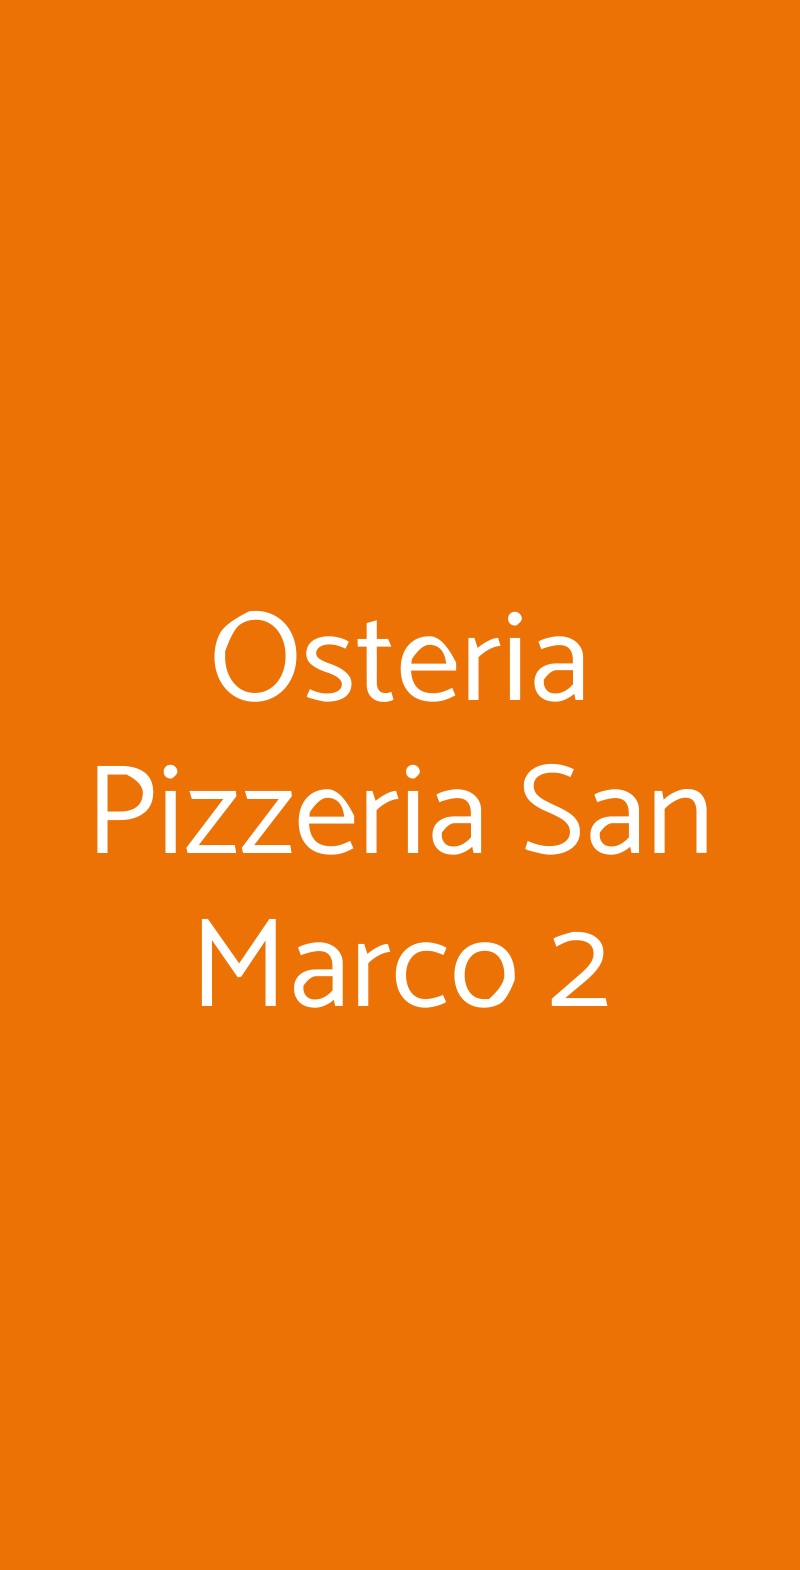 Osteria Pizzeria San Marco 2 Baone menù 1 pagina